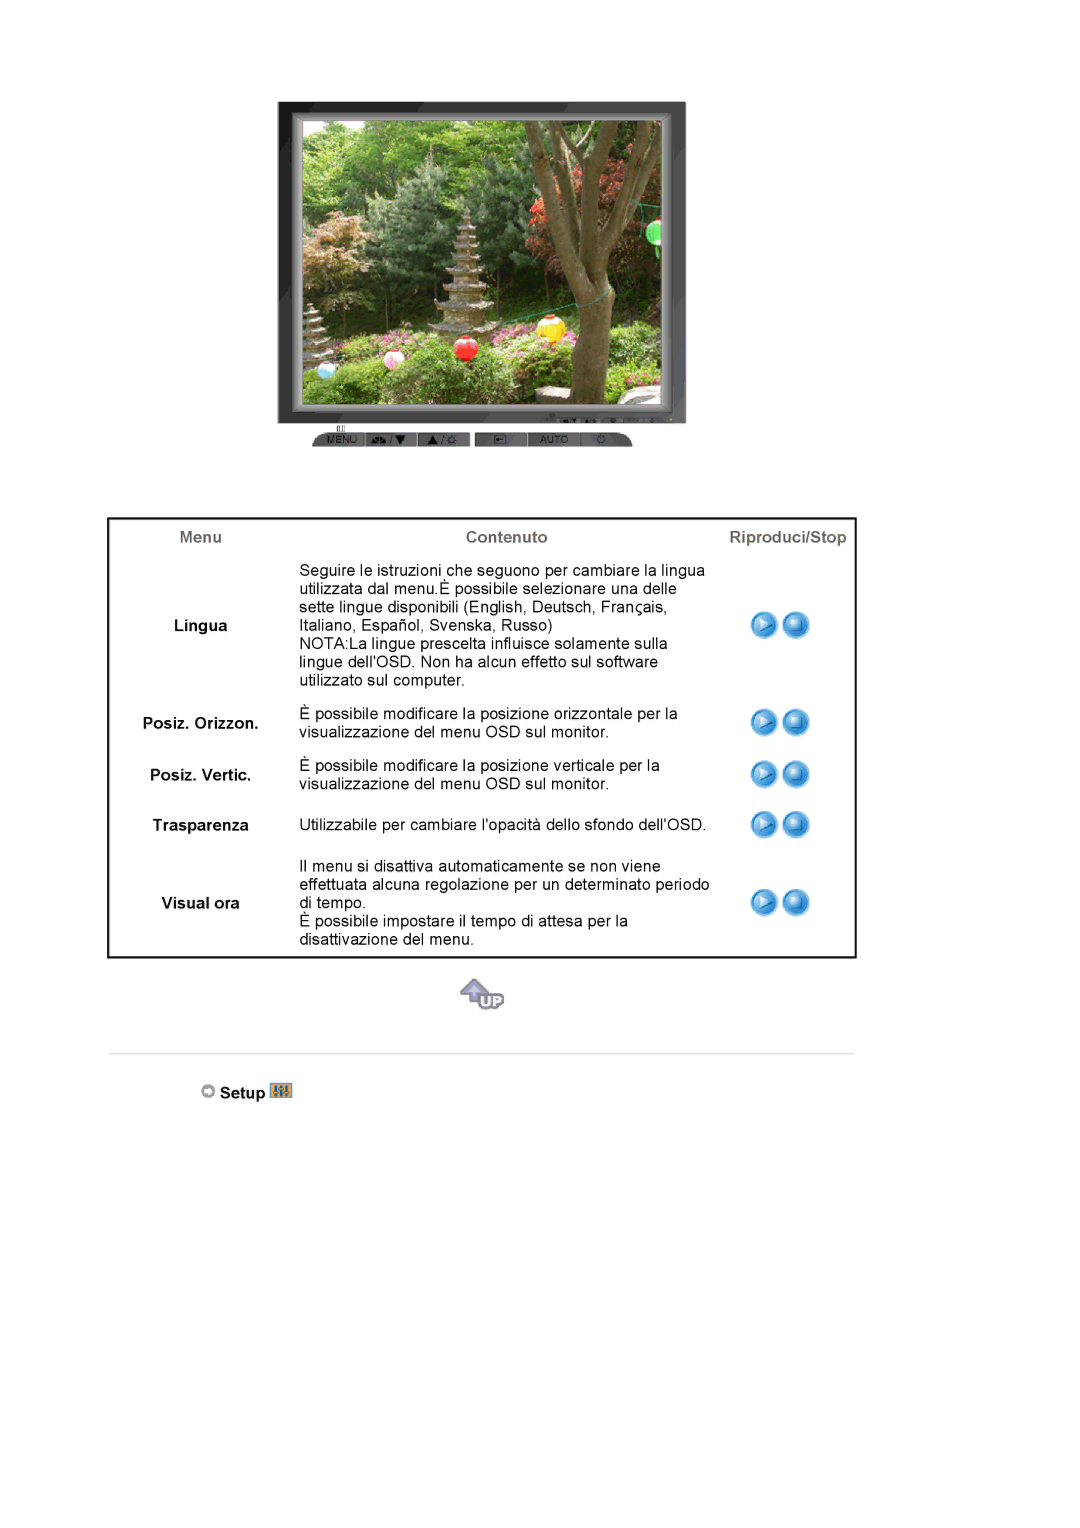 Samsung MJ17CSKS/EDC manual Lingua Posiz. Orizzon Posiz. Vertic. Trasparenza Visual ora, Setup 